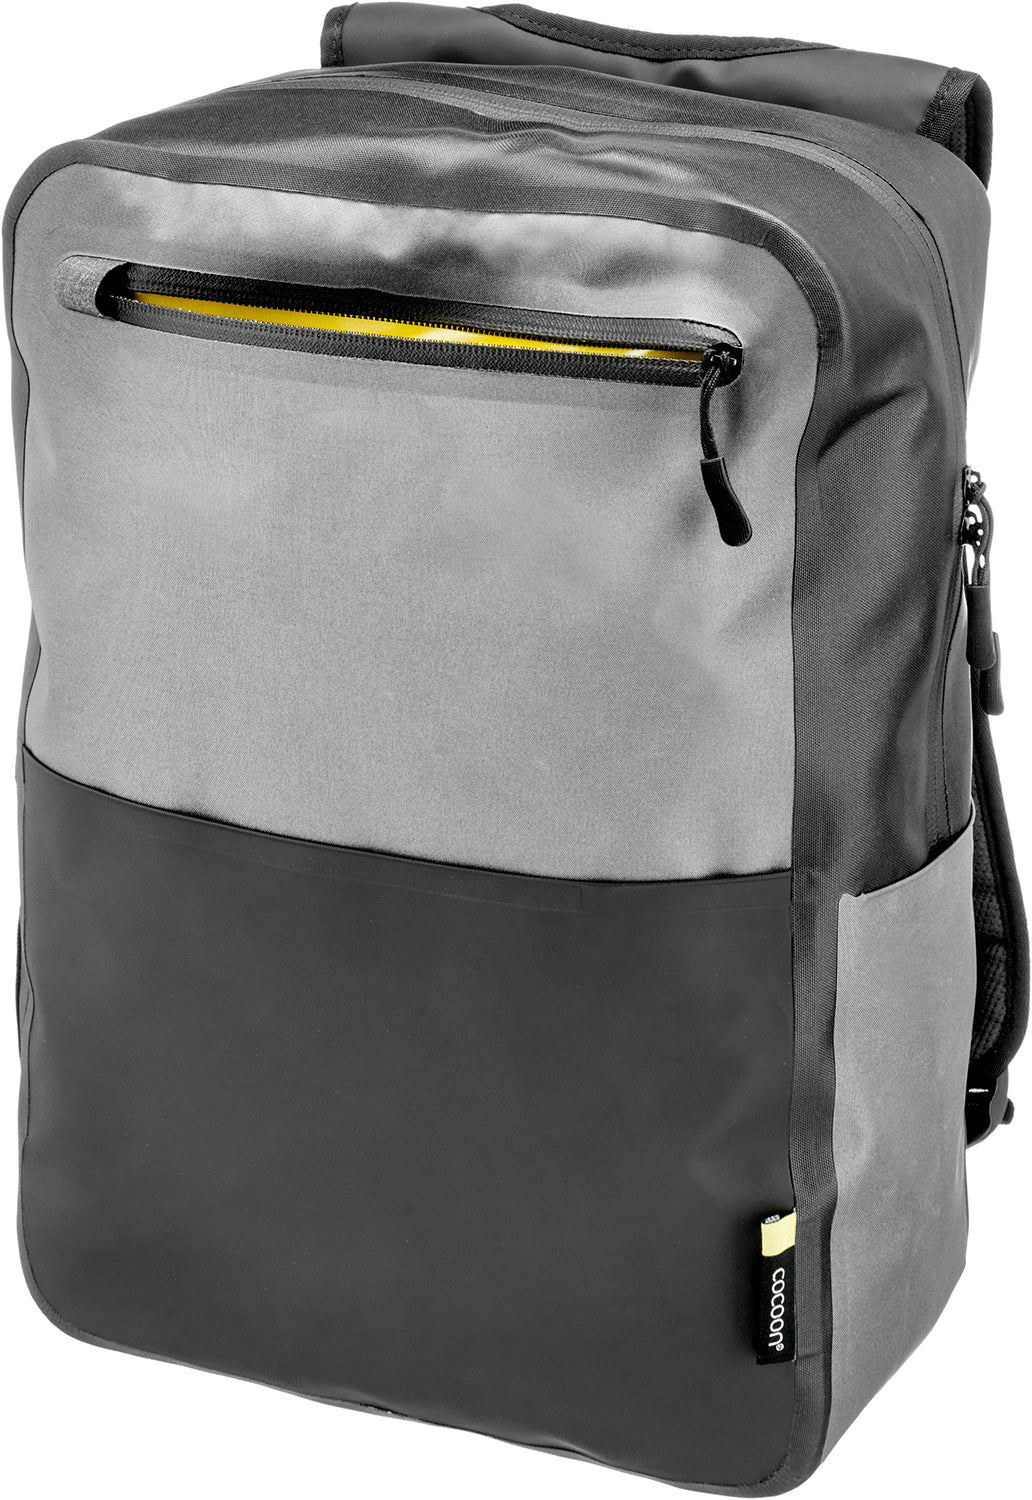 Cocoon City Traveler Backpack grey/black/yellow